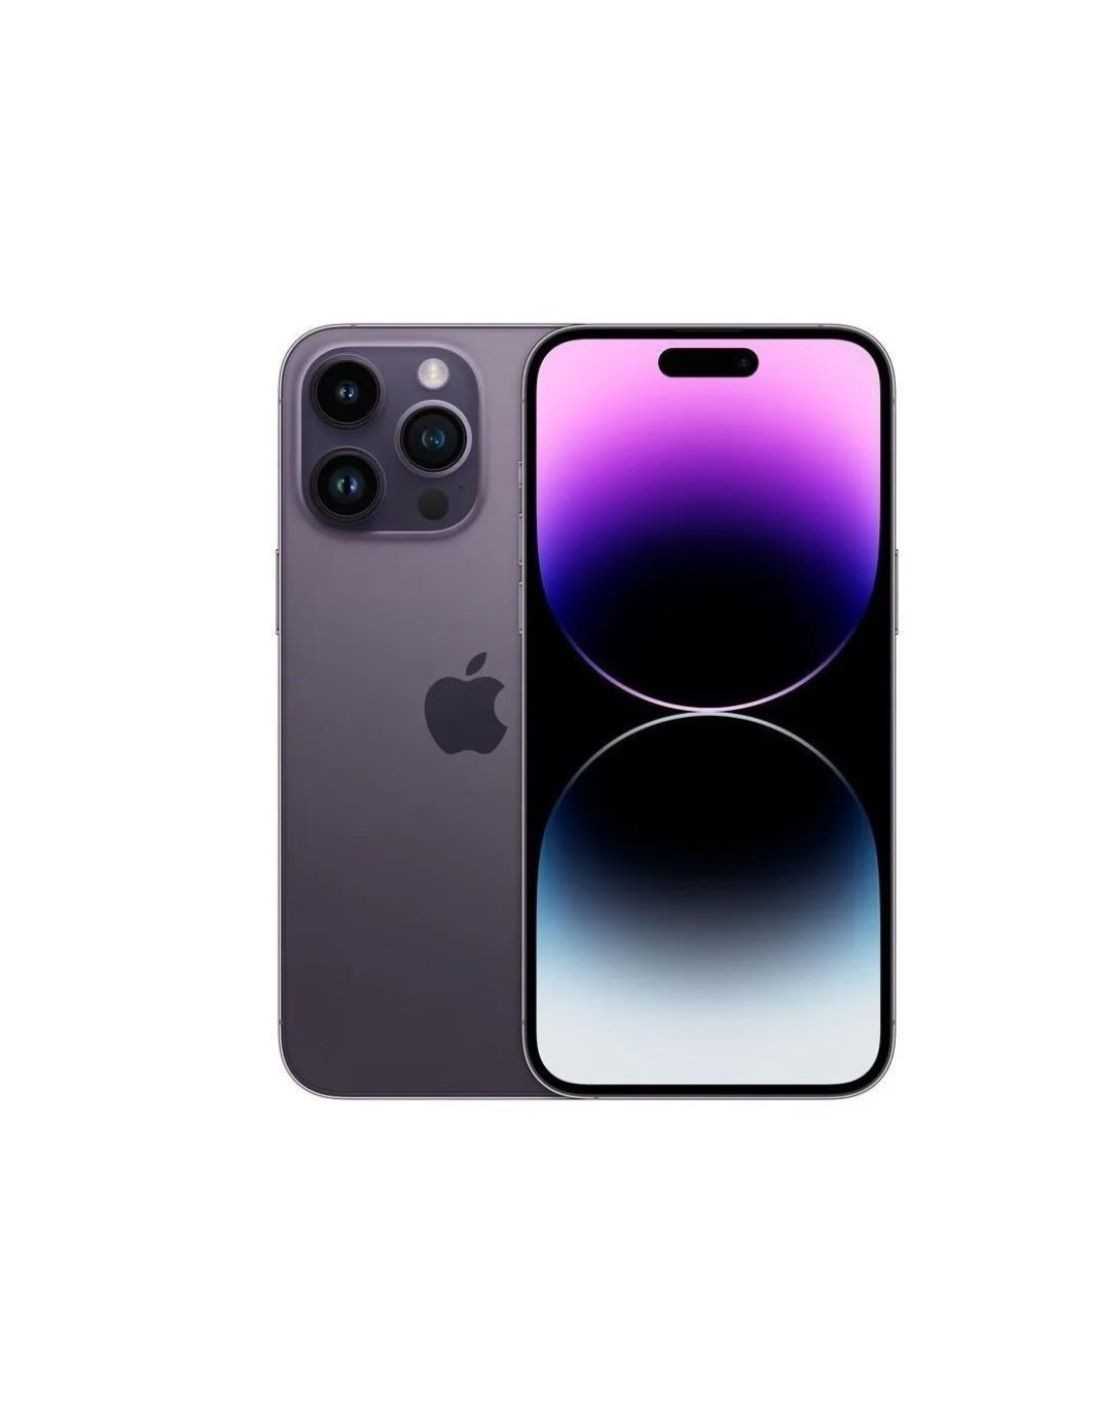 Apple iPhone 14 Pro 128GB color púrpura, 6.1, Pantalla Super